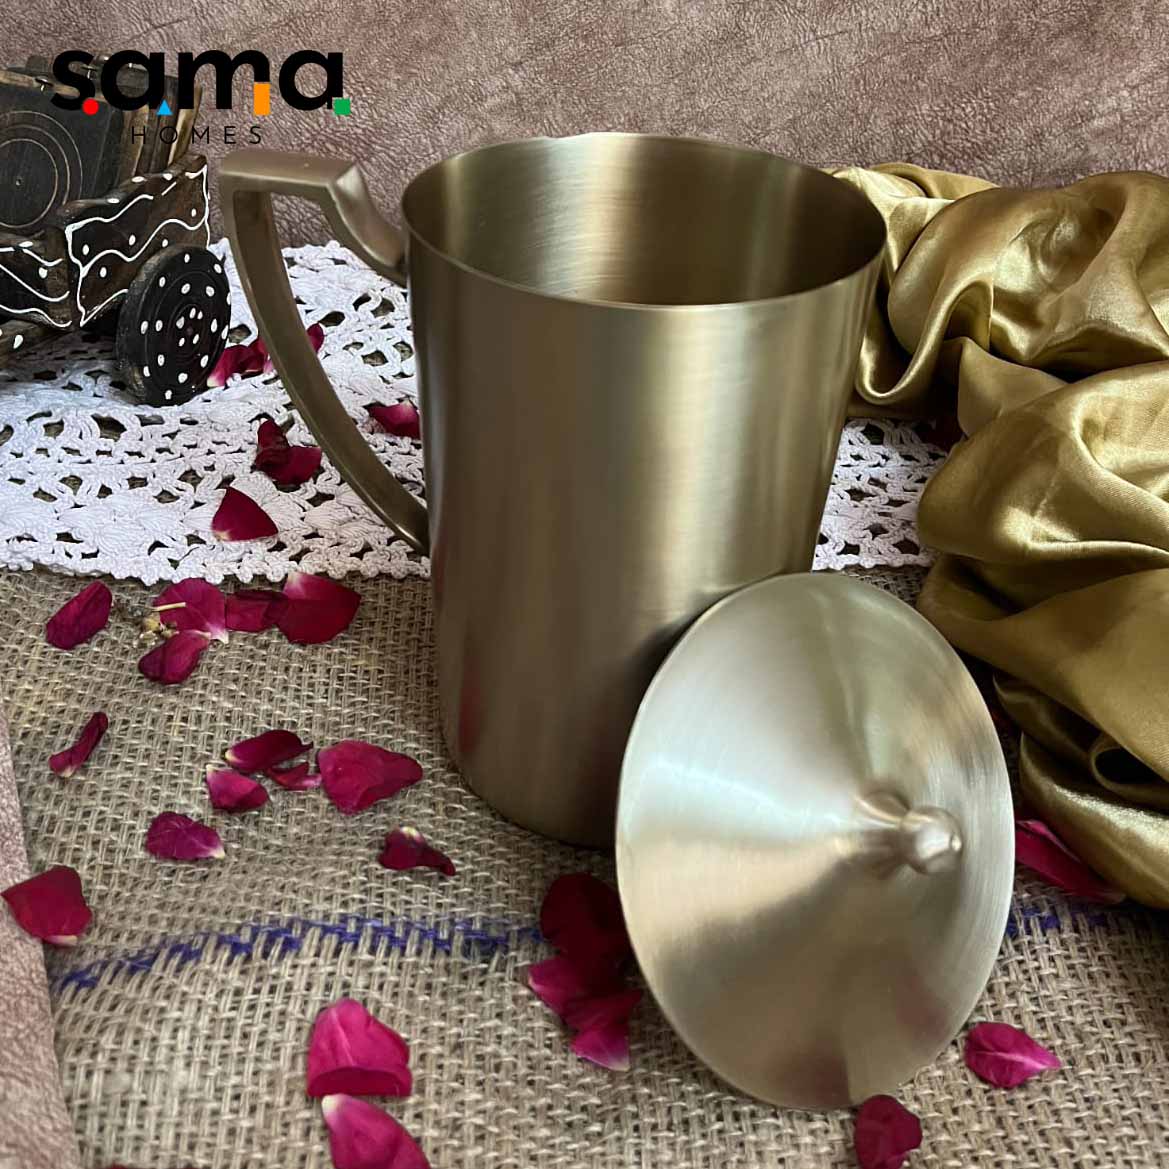 SAMA Homes - kansa bronze jug with matte finish